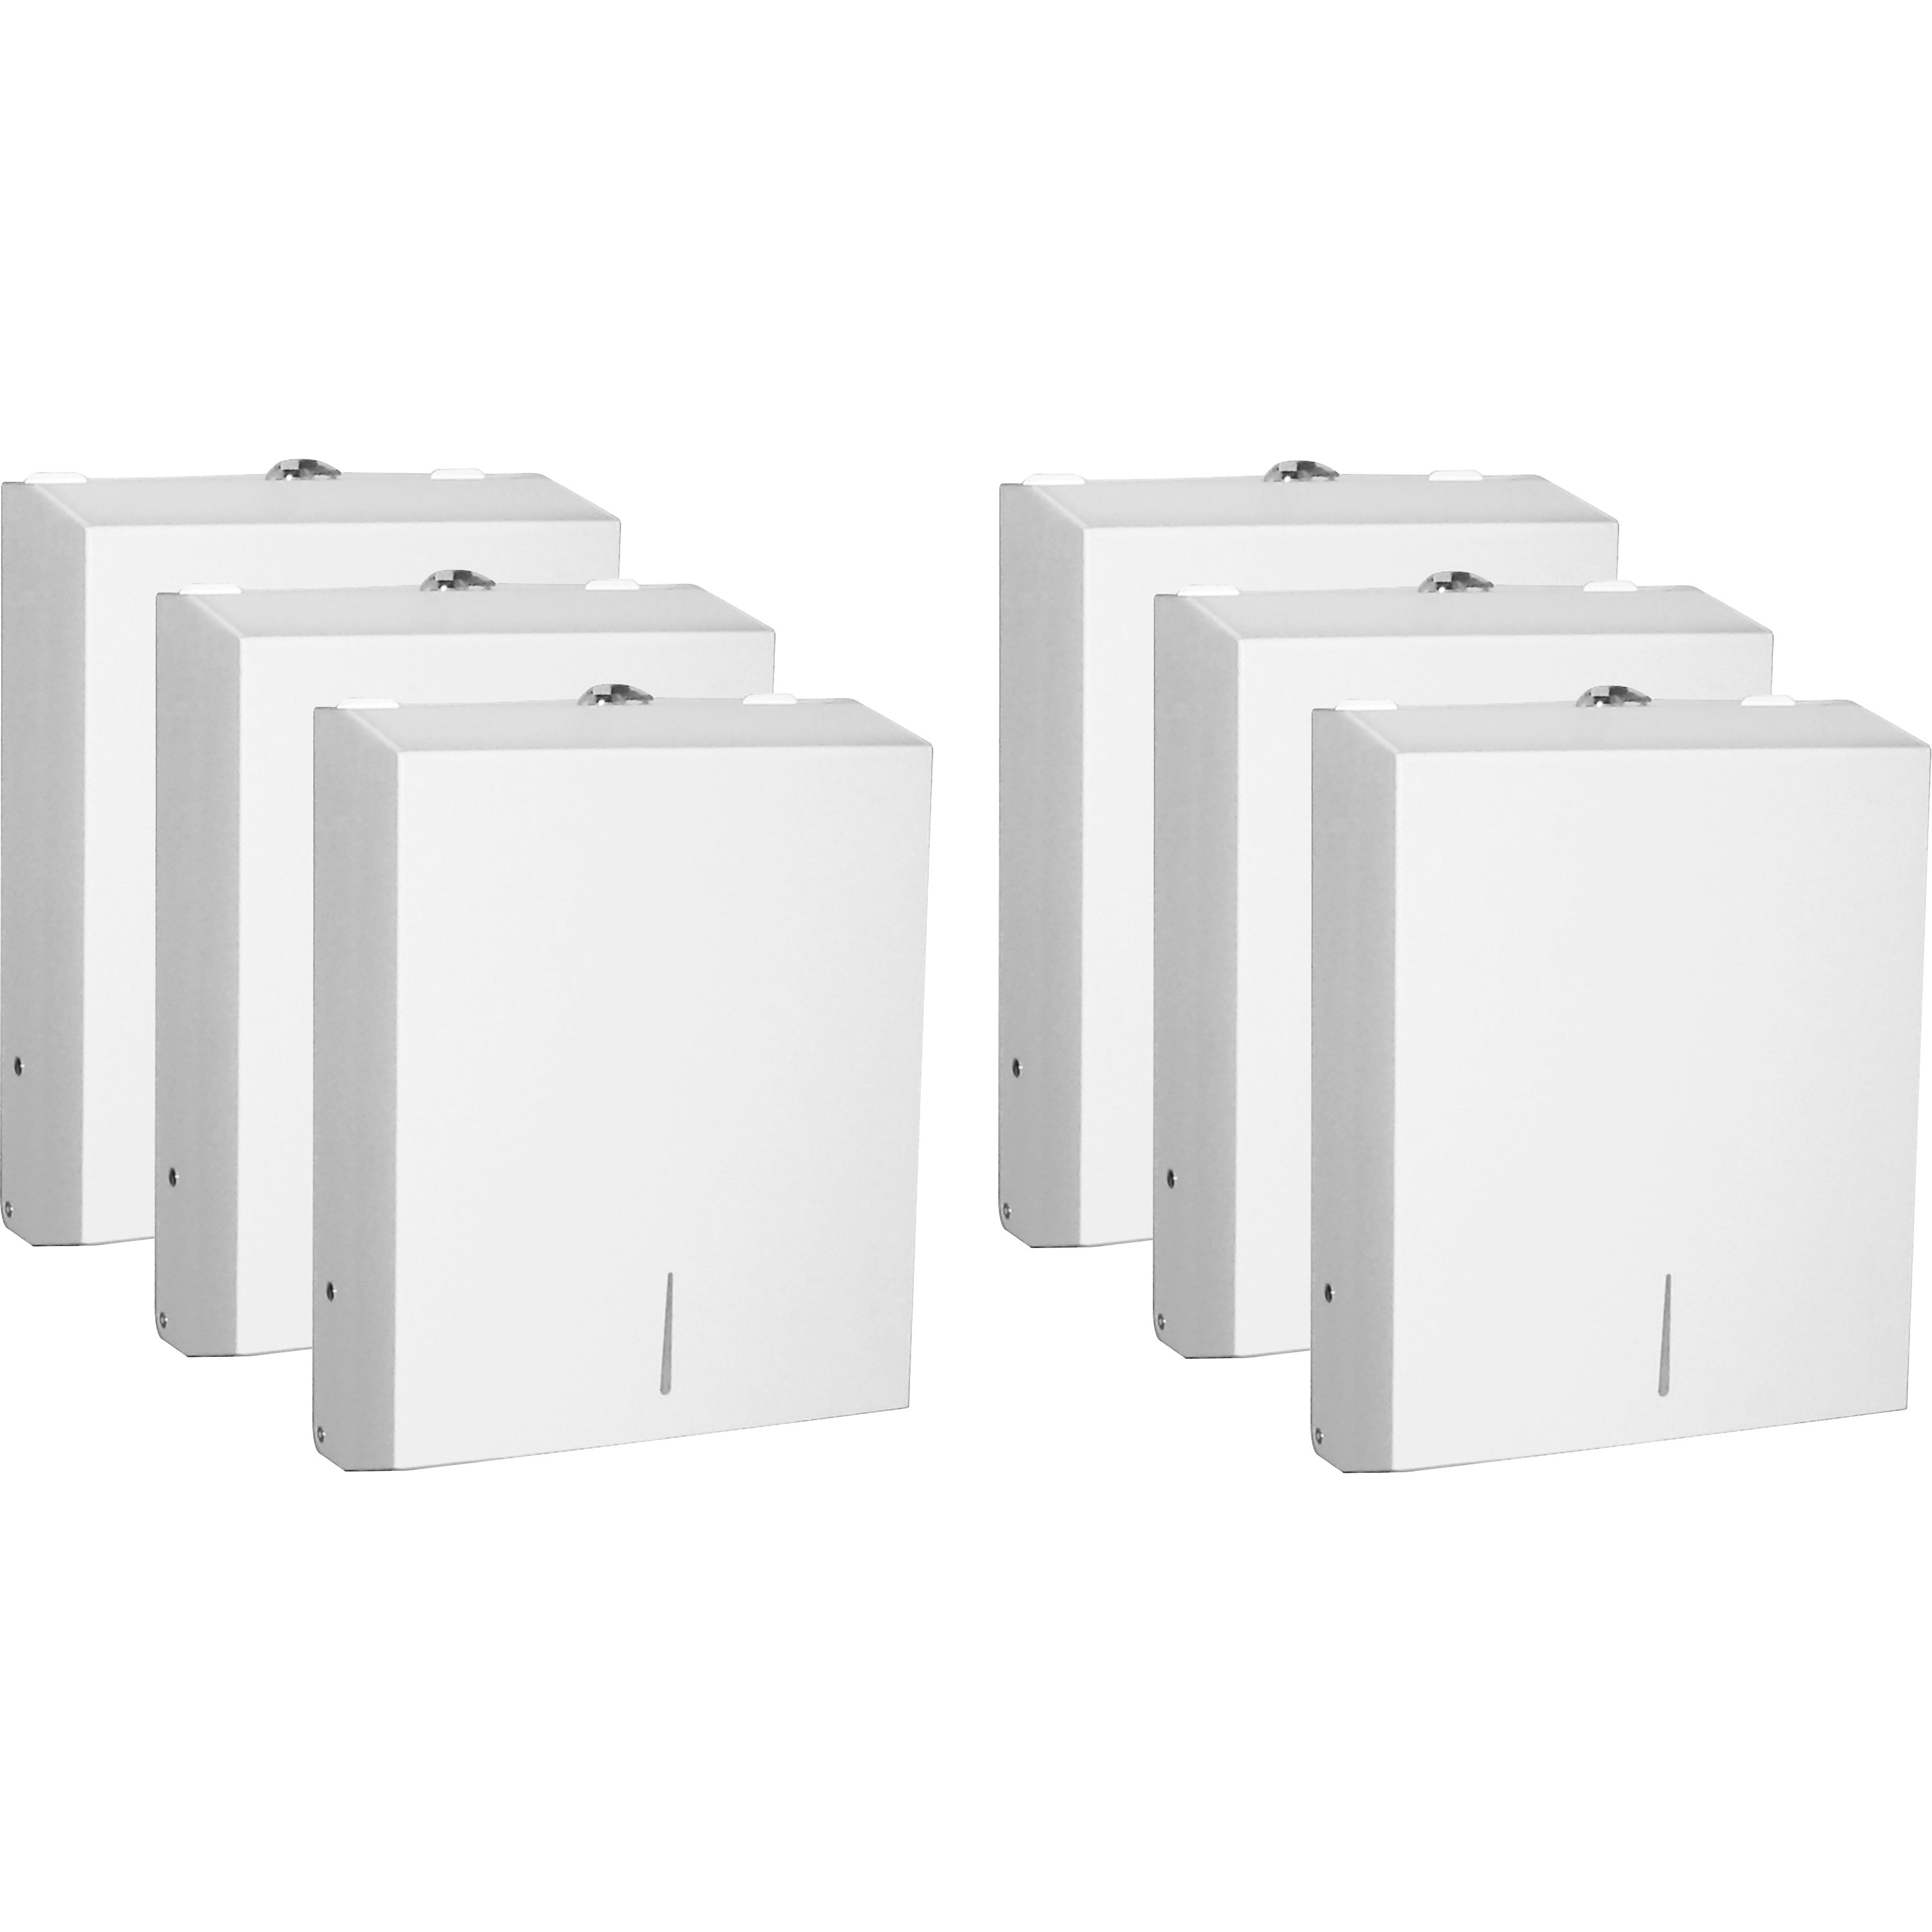 genuine-joe-c-fold-multi-fold-towel-dispenser-cabinet-c-fold-multifold-dispenser-135-height-x-11-width-x-43-depth-stainless-steel-metal-white-wall-mountable-6-carton_gjo02197ct - 1